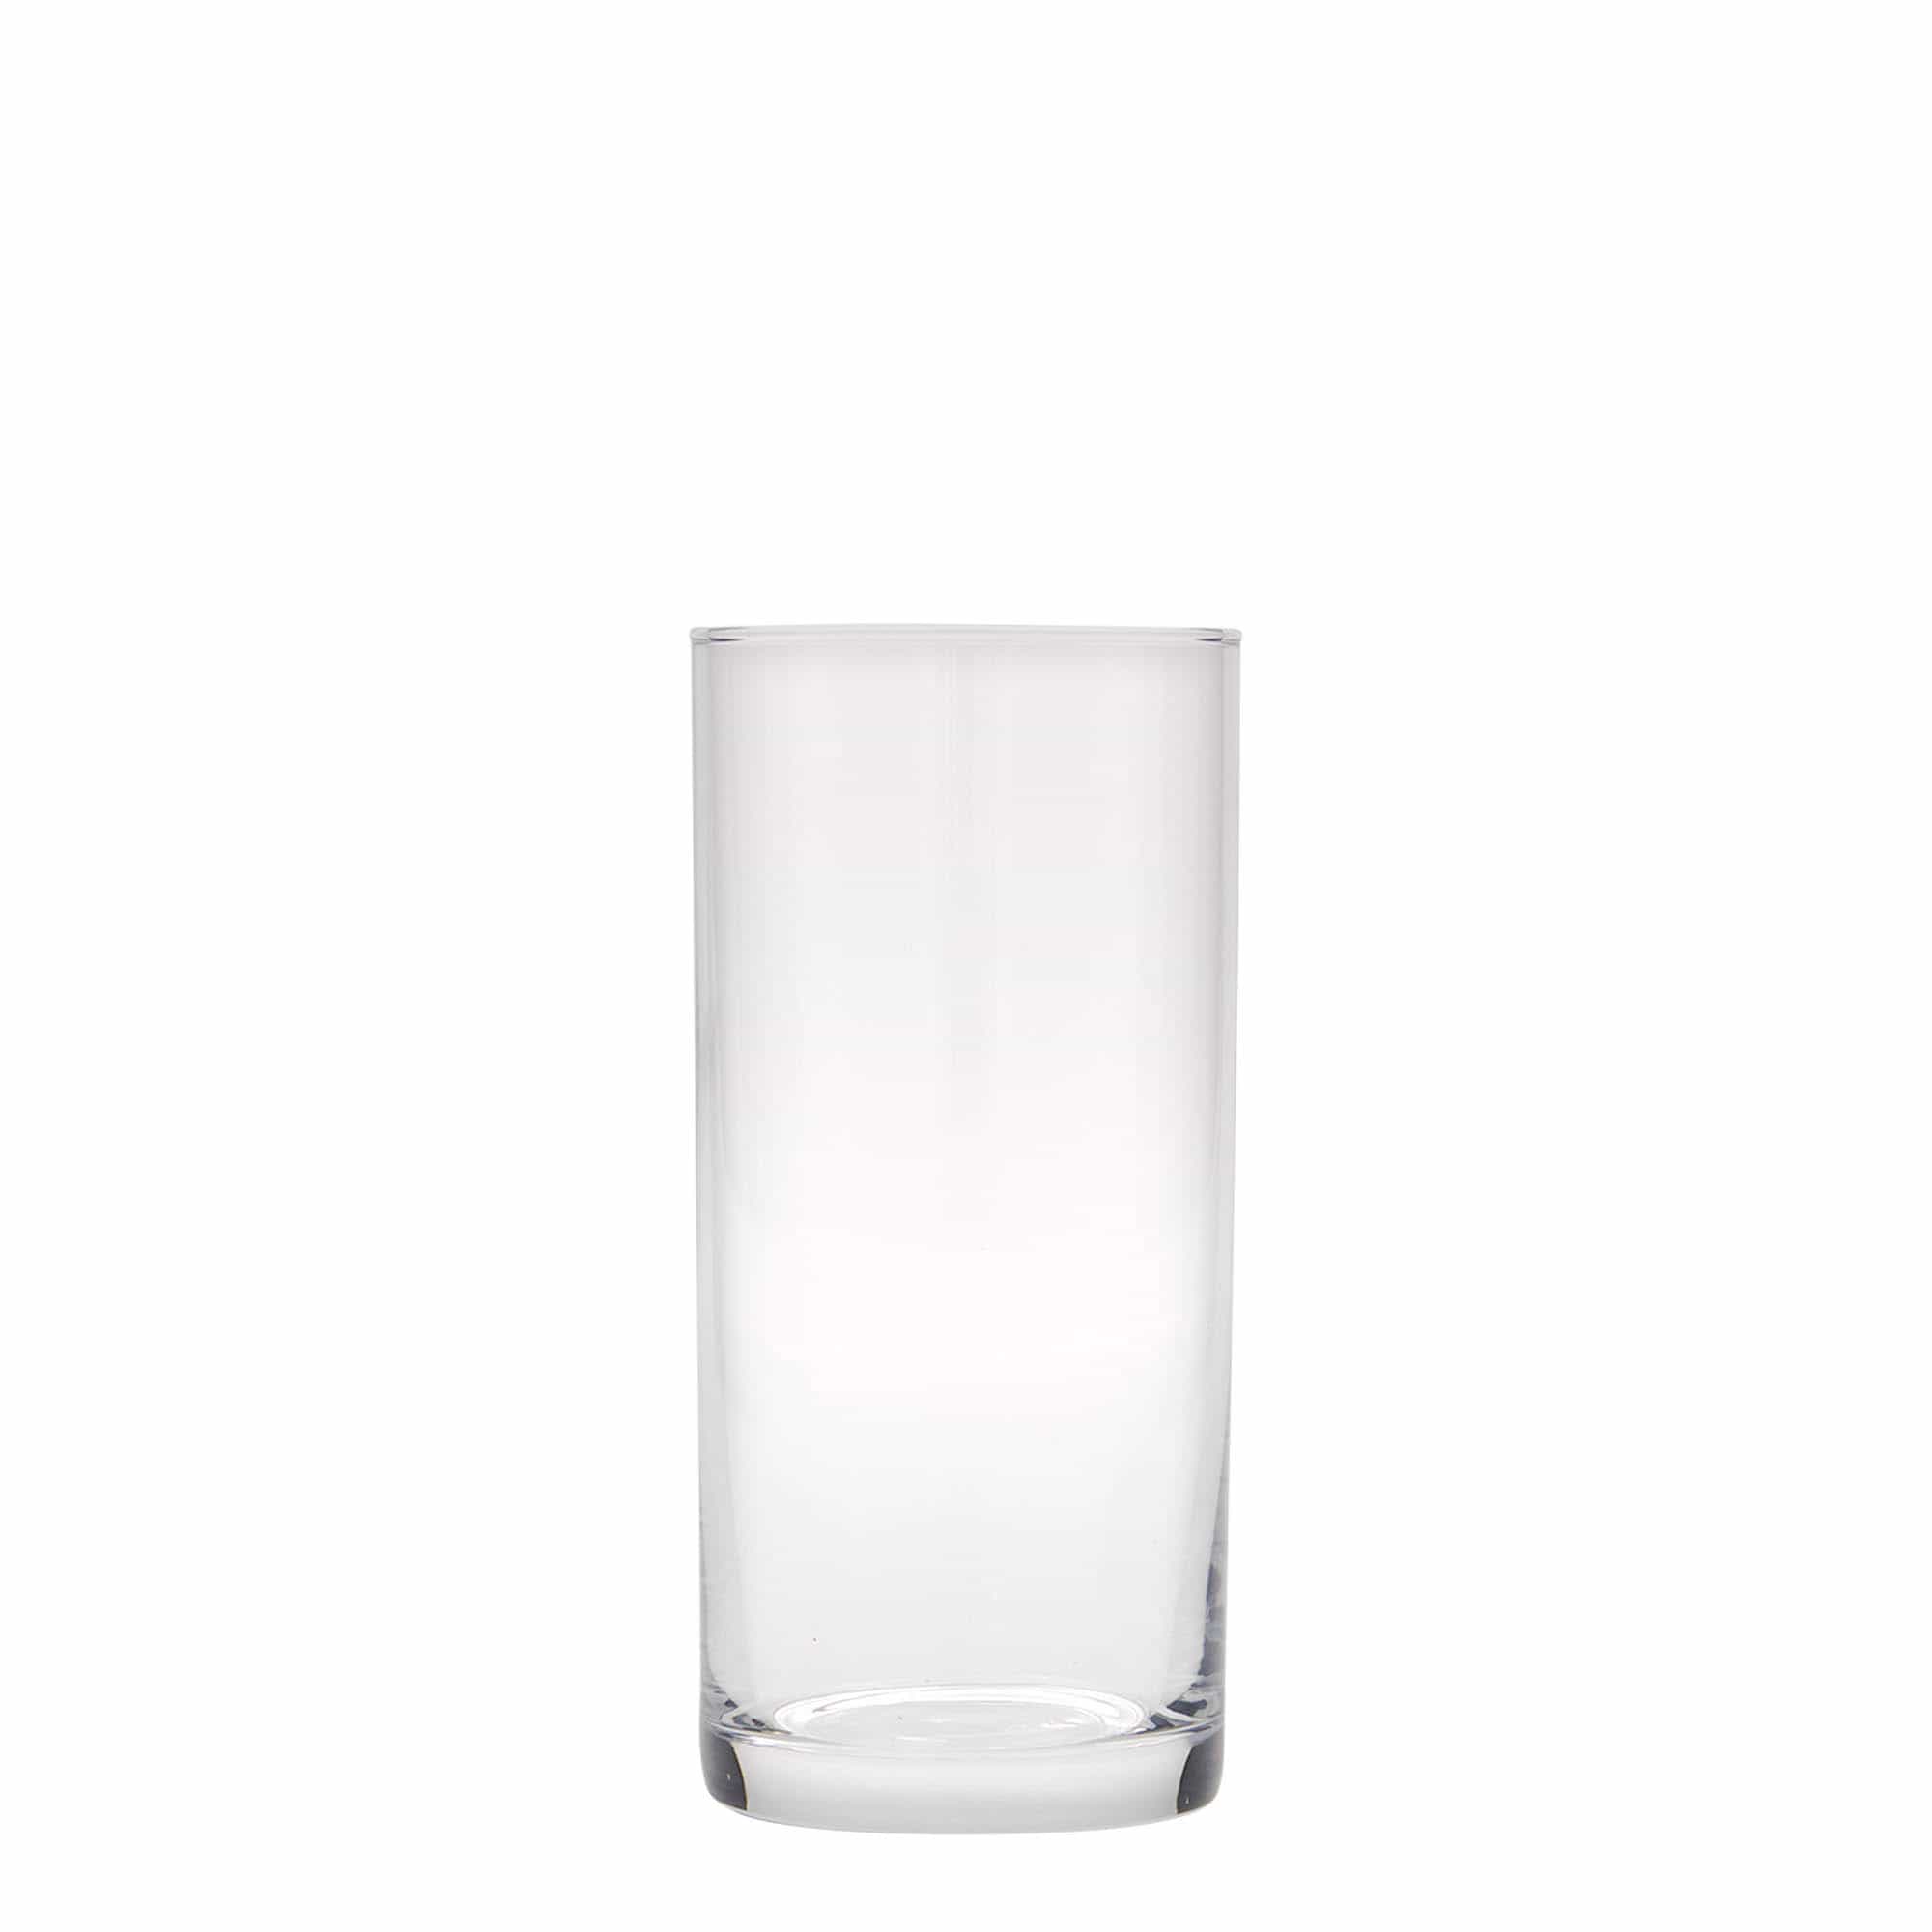 Drinkglas 'Altbier', 200 ml, glas